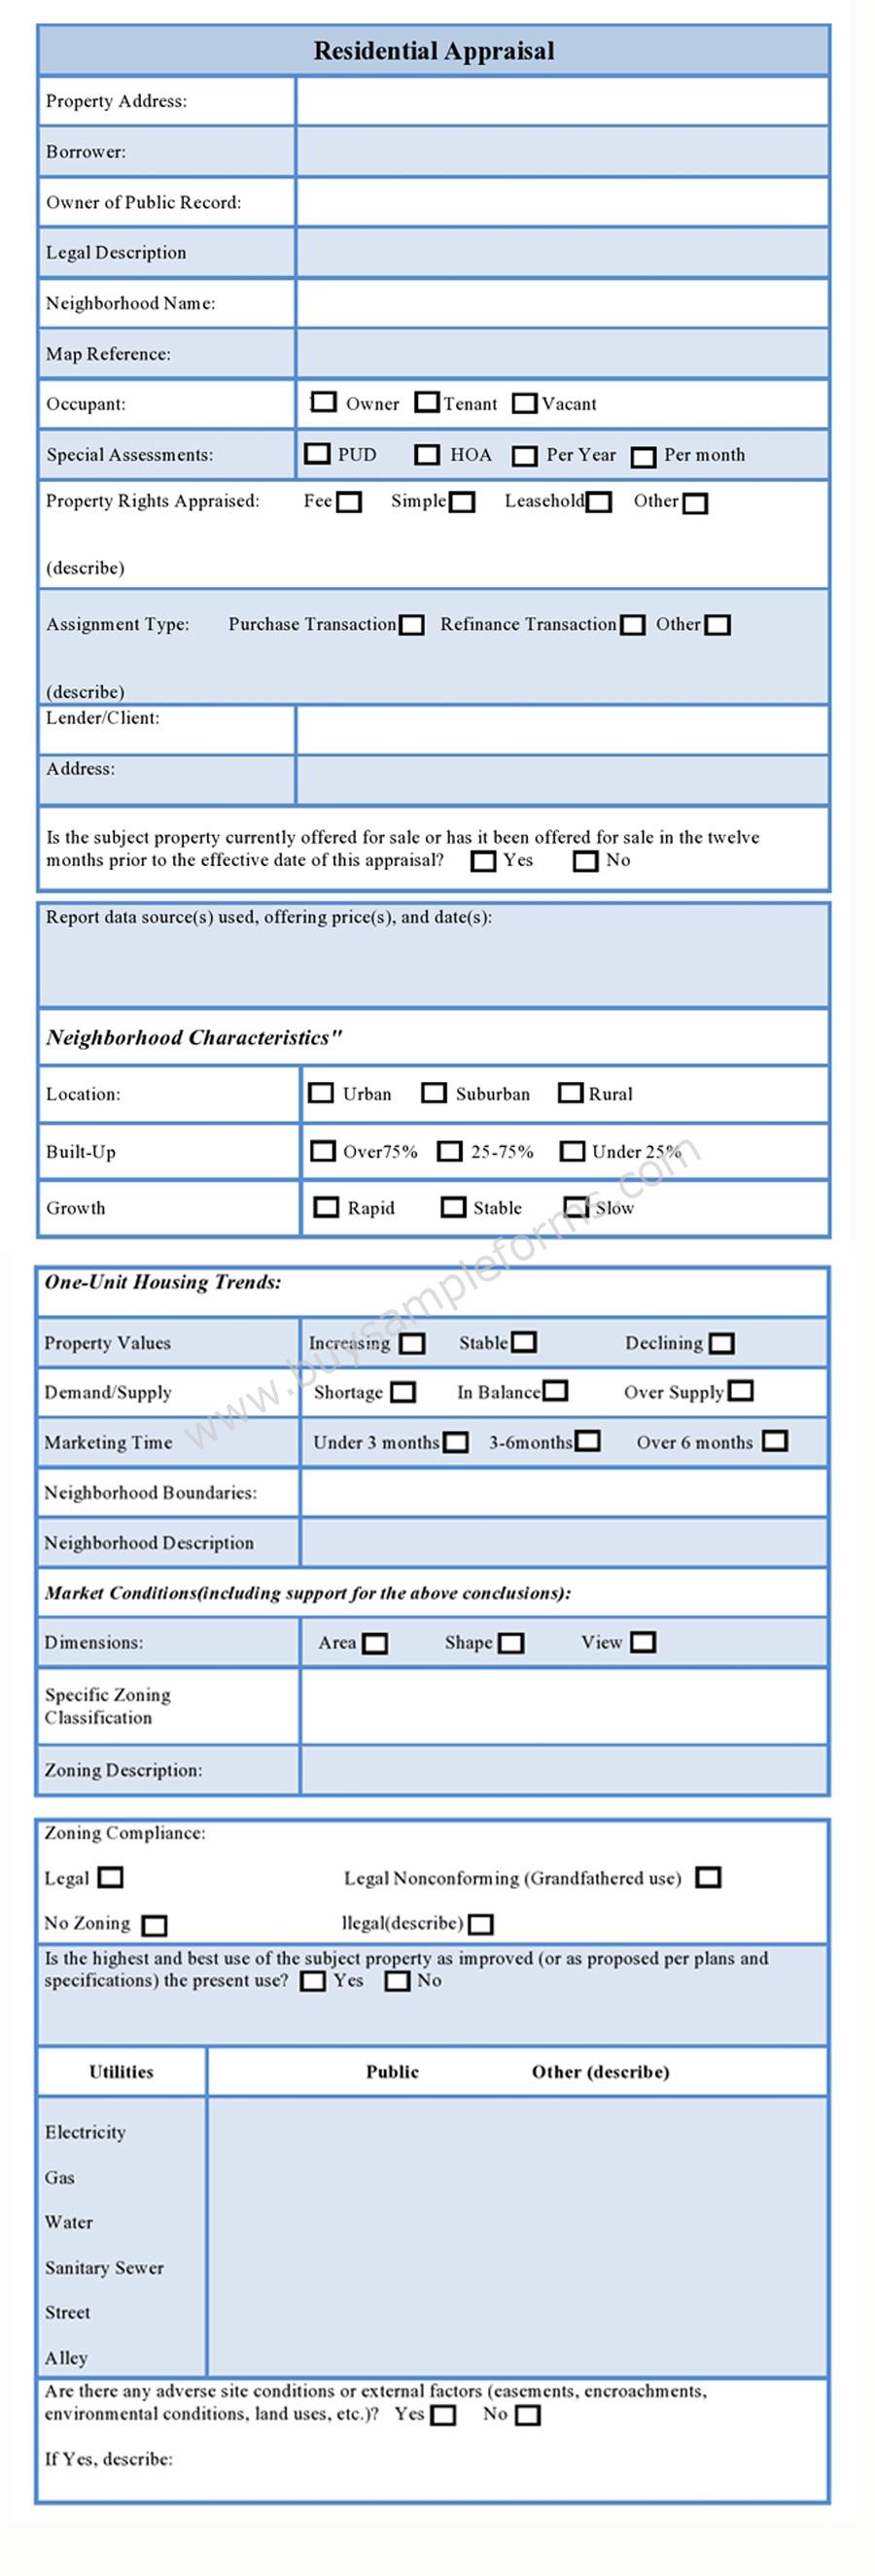 Residential Appraisal Form